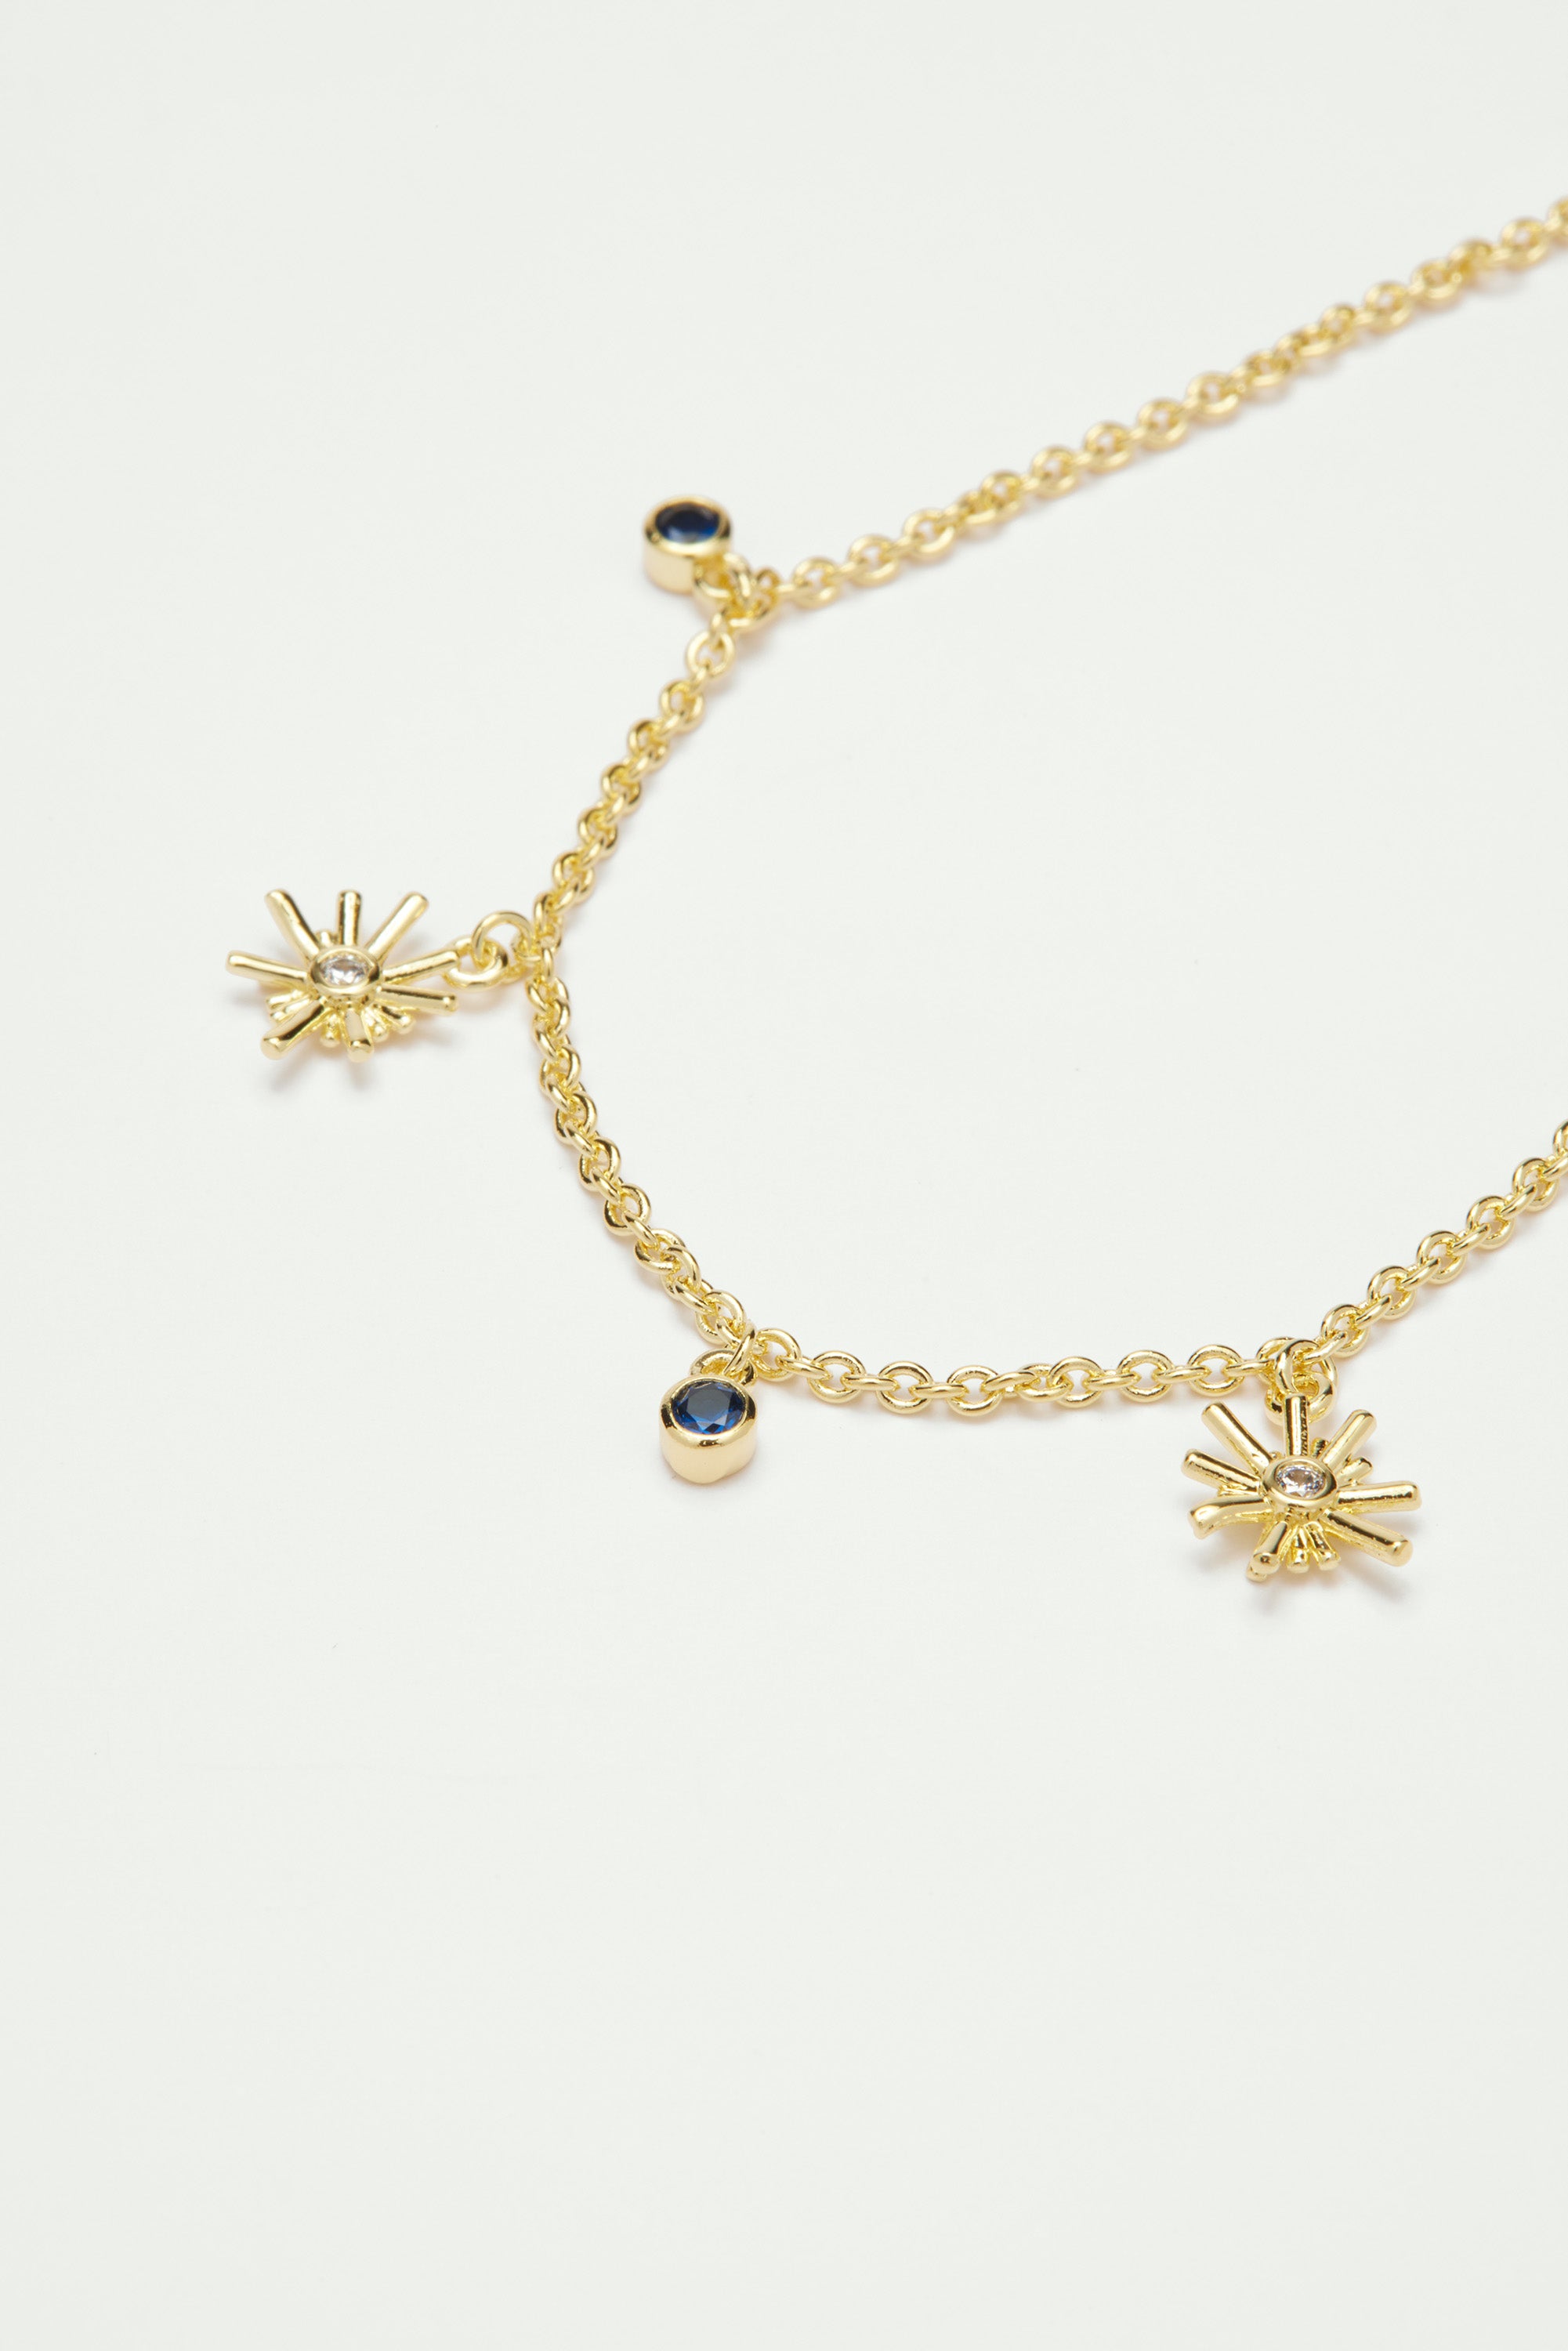 Gold stars and midnight blue stone charm bracelet